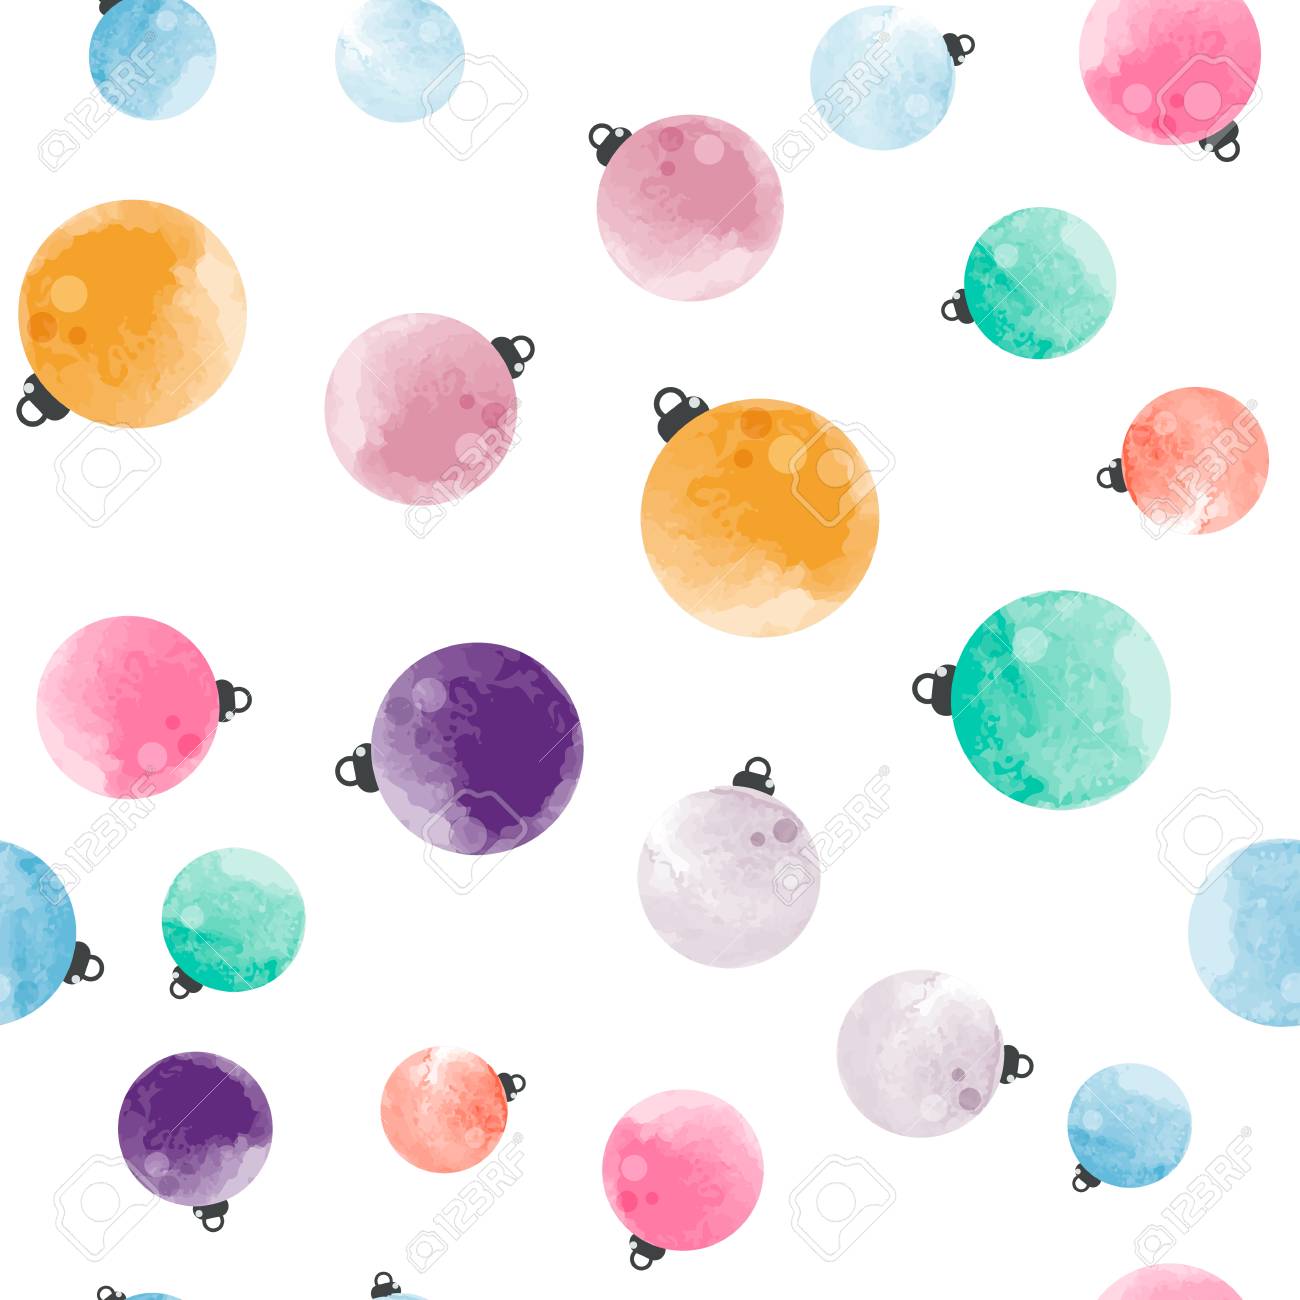 Cute Different Colorful Decorative Watercolor Christmas Balls